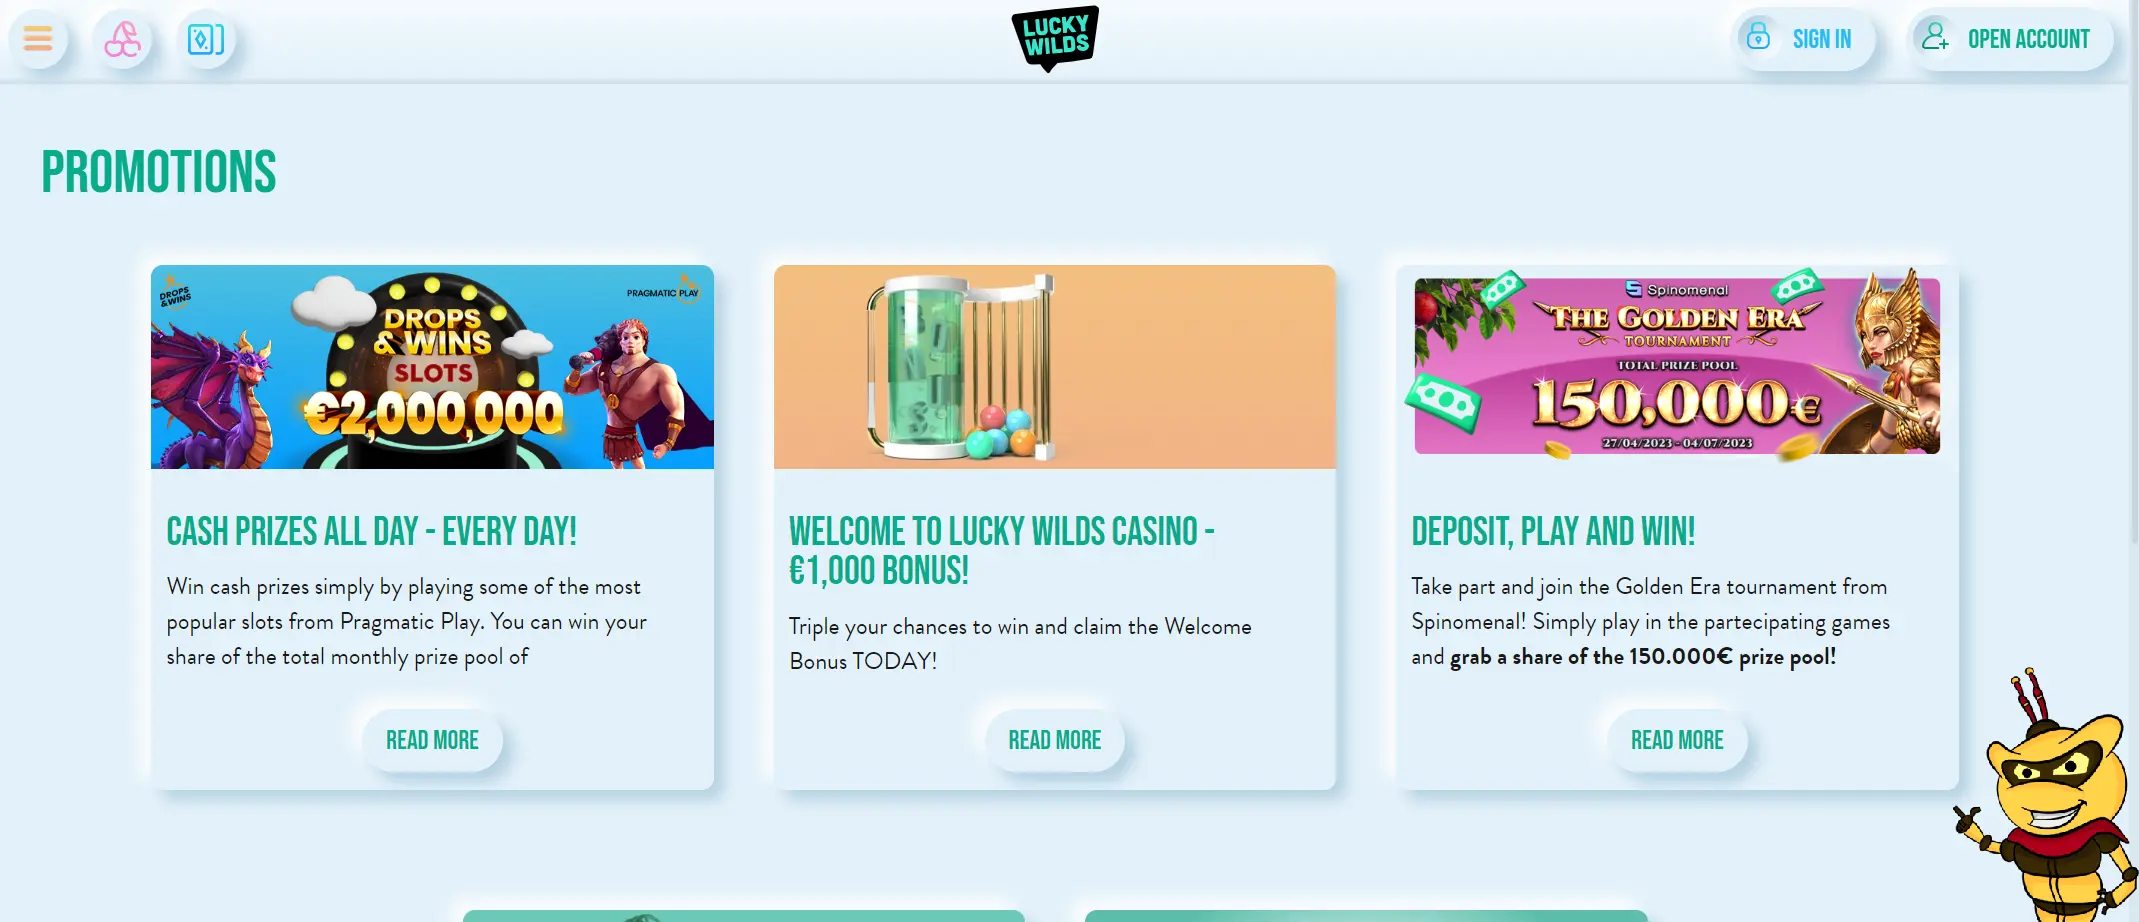 Overview of Lucky Wilds Casino Bonus Offers